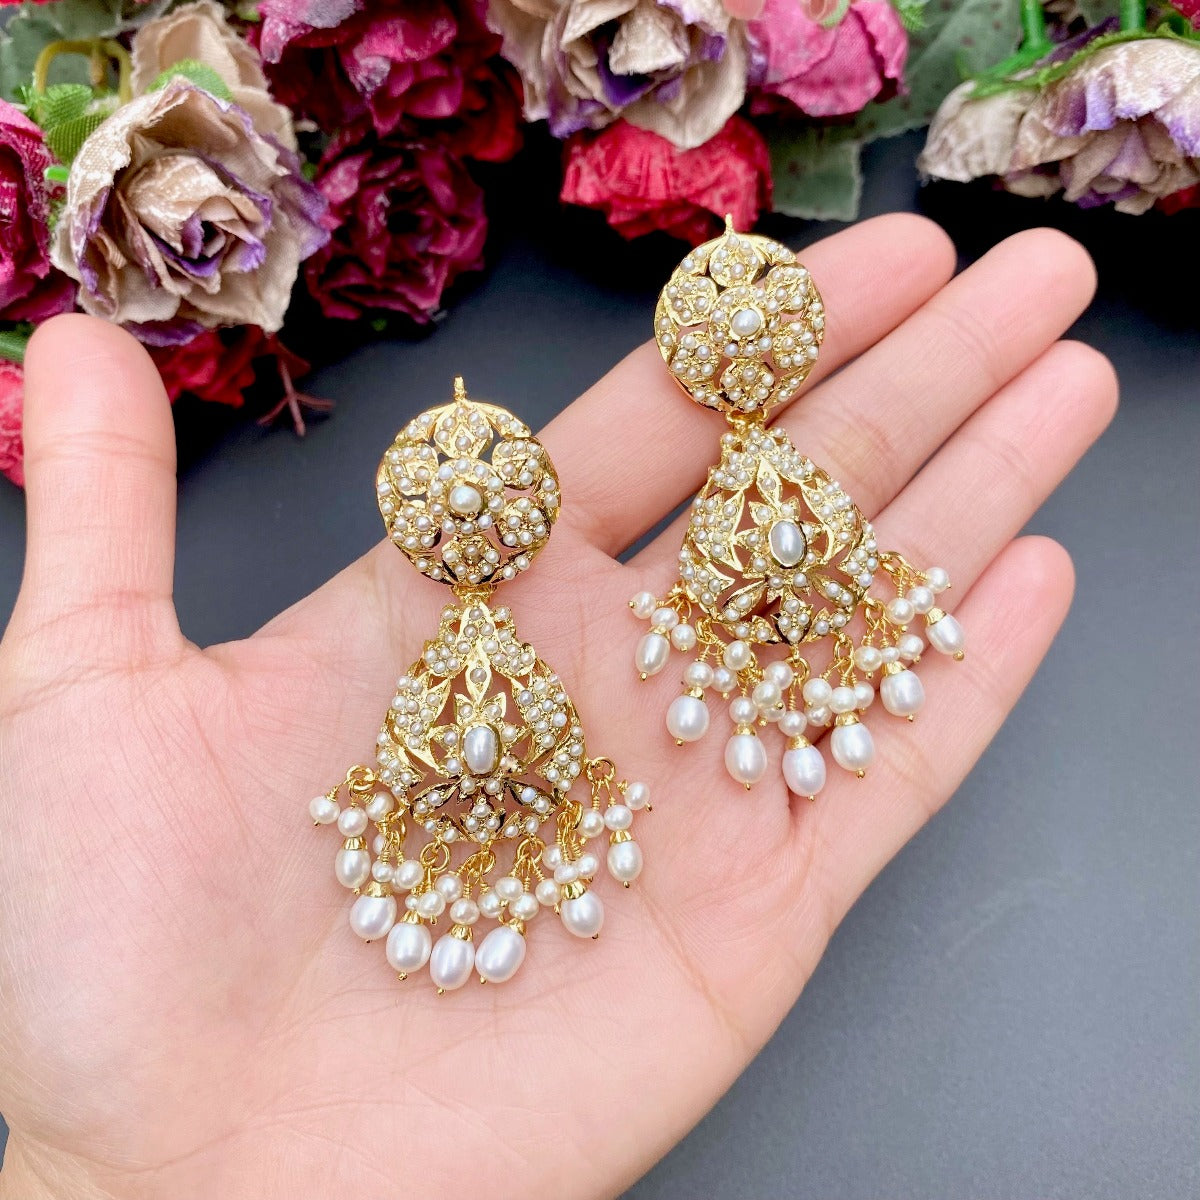 rajasthani jadau earrings with pearls